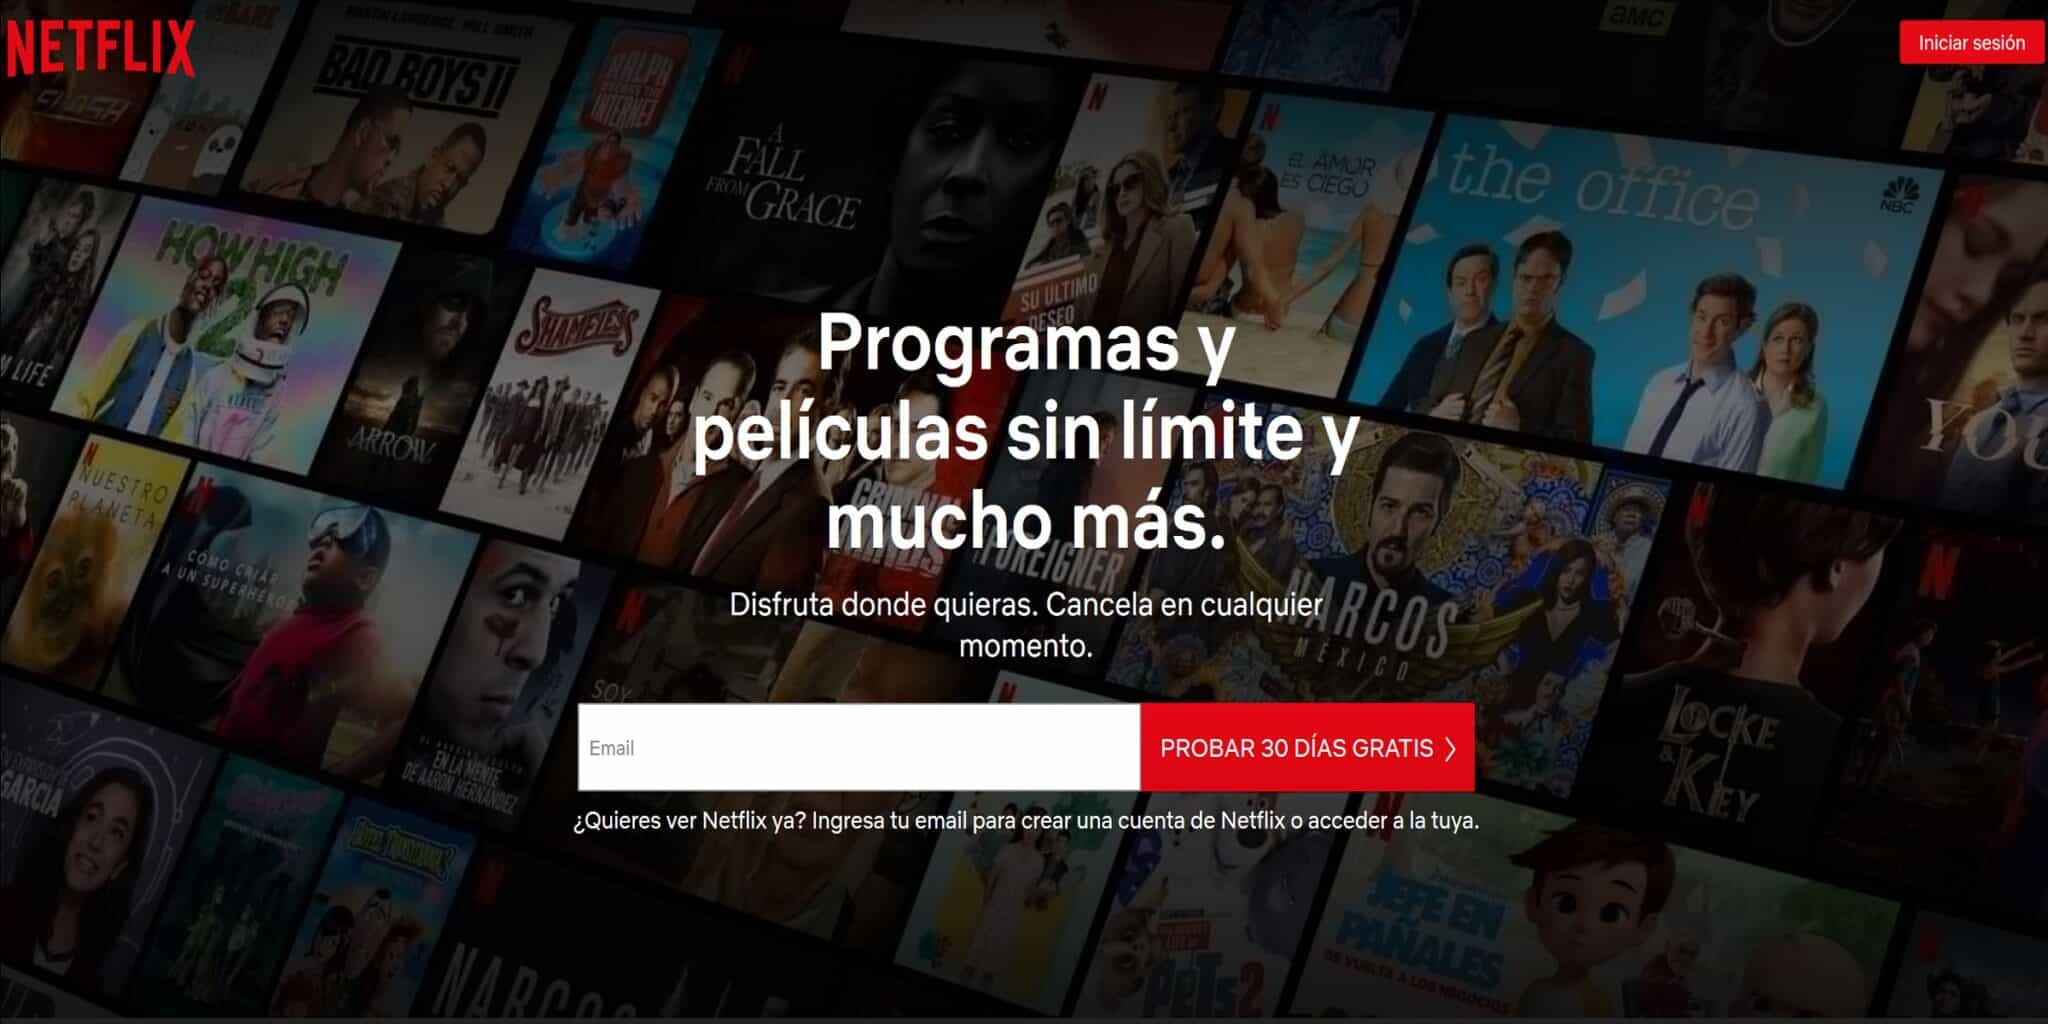 movie websites in spanish